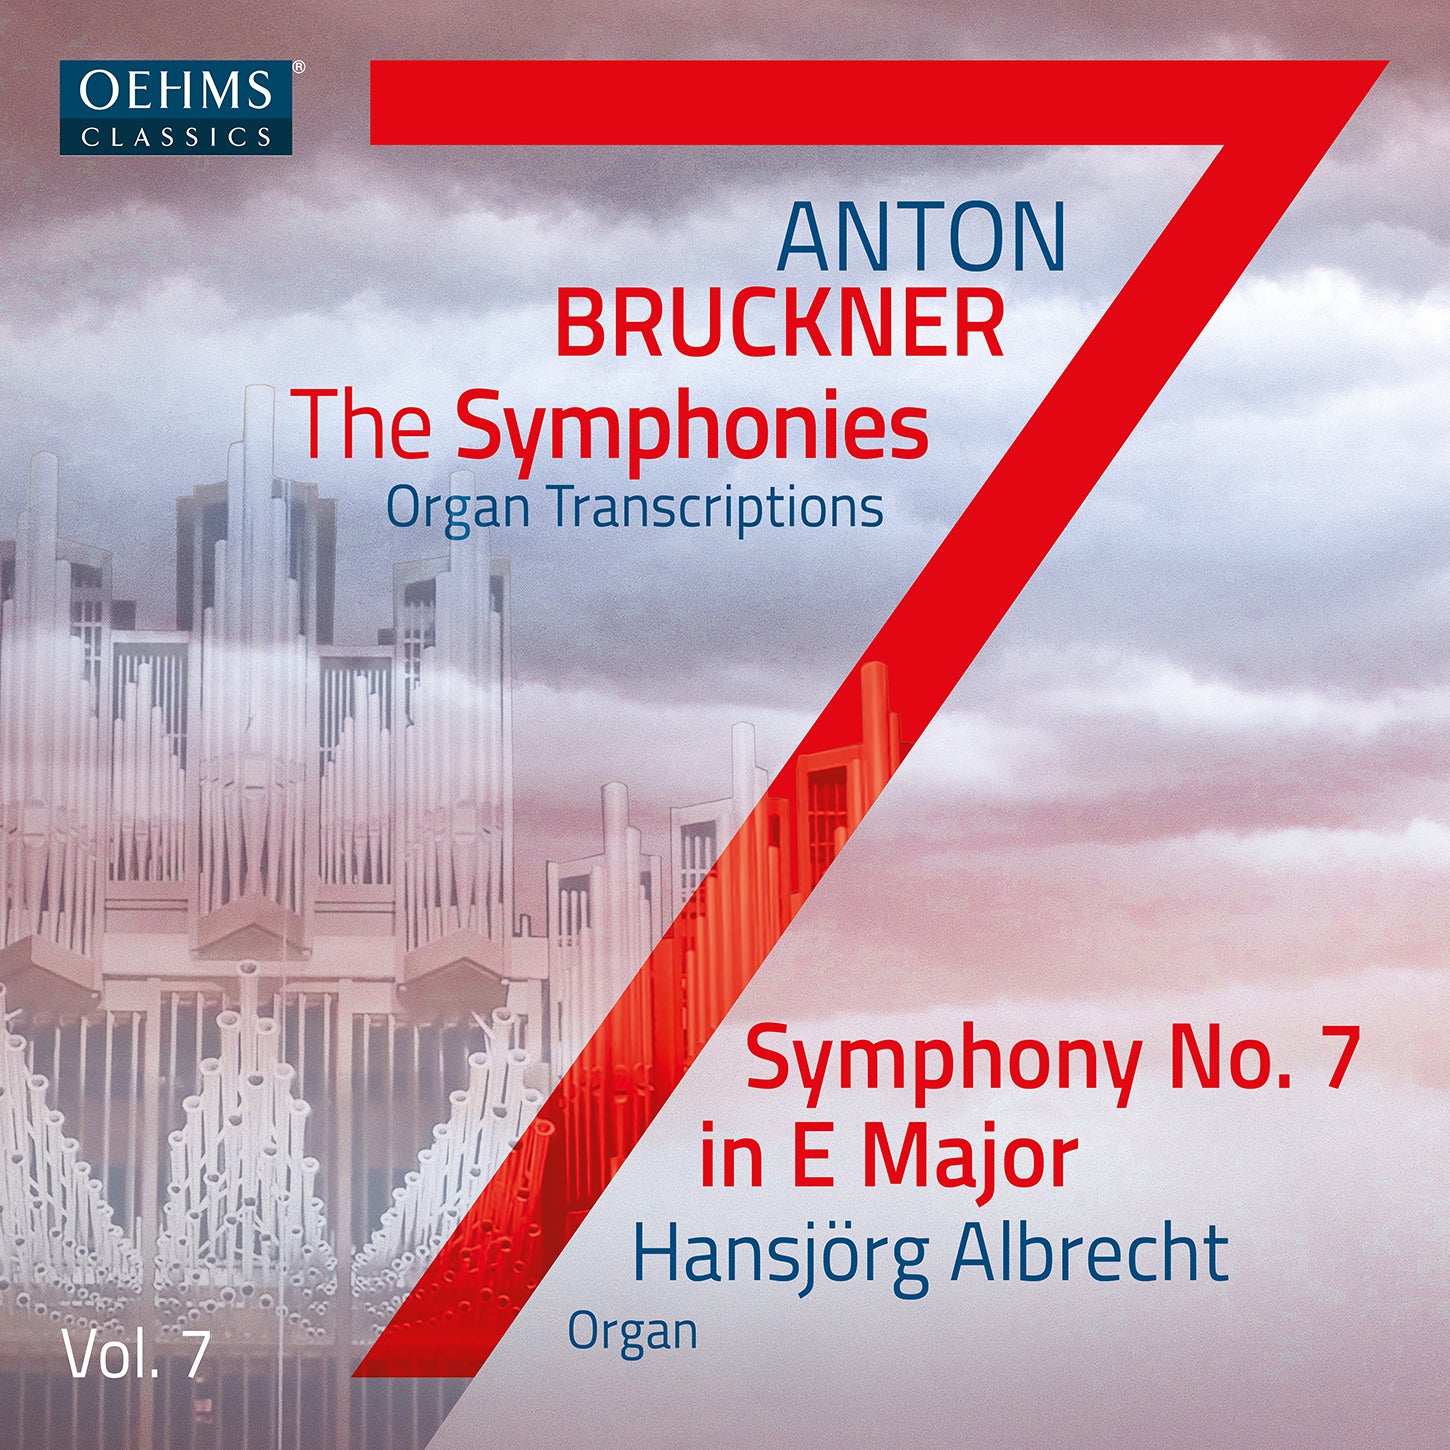 The Bruckner Symphonies, Vol. 7 / Hansjörg Albrecht